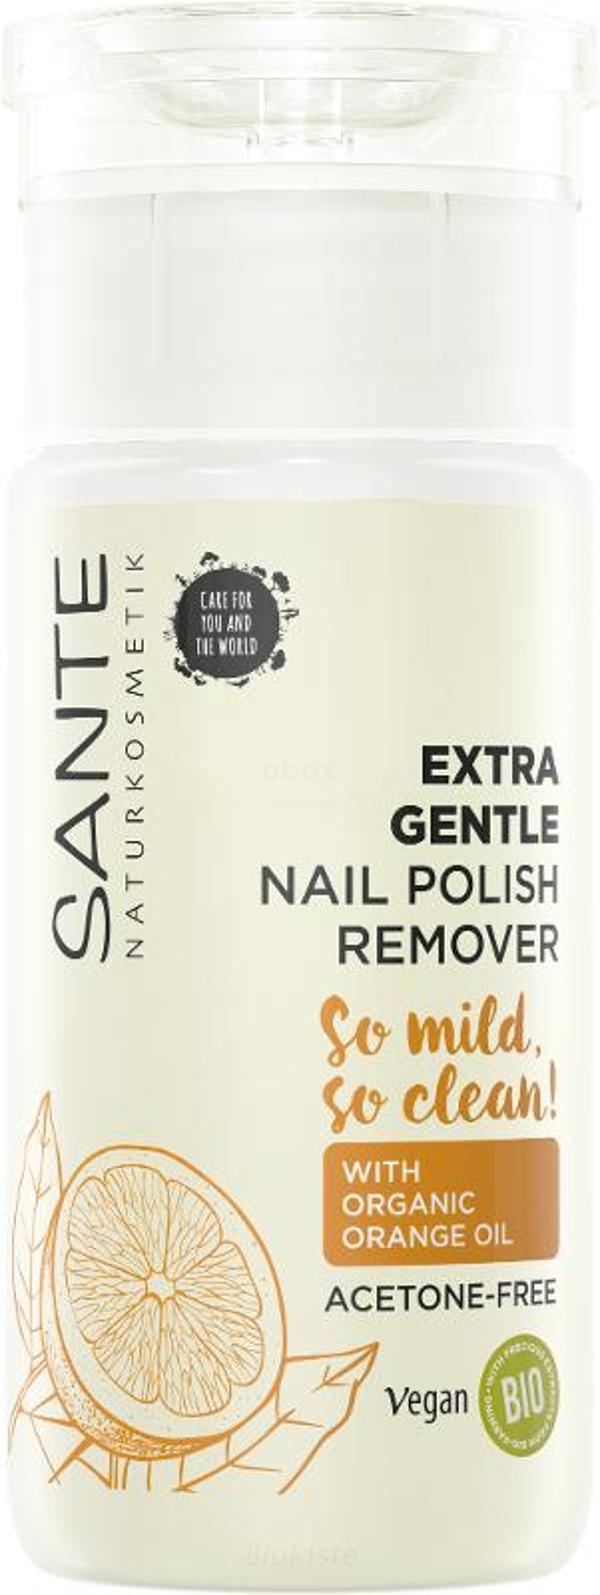 Produktfoto zu Extra Gentle Nail Polish Remover Nagellackentferner